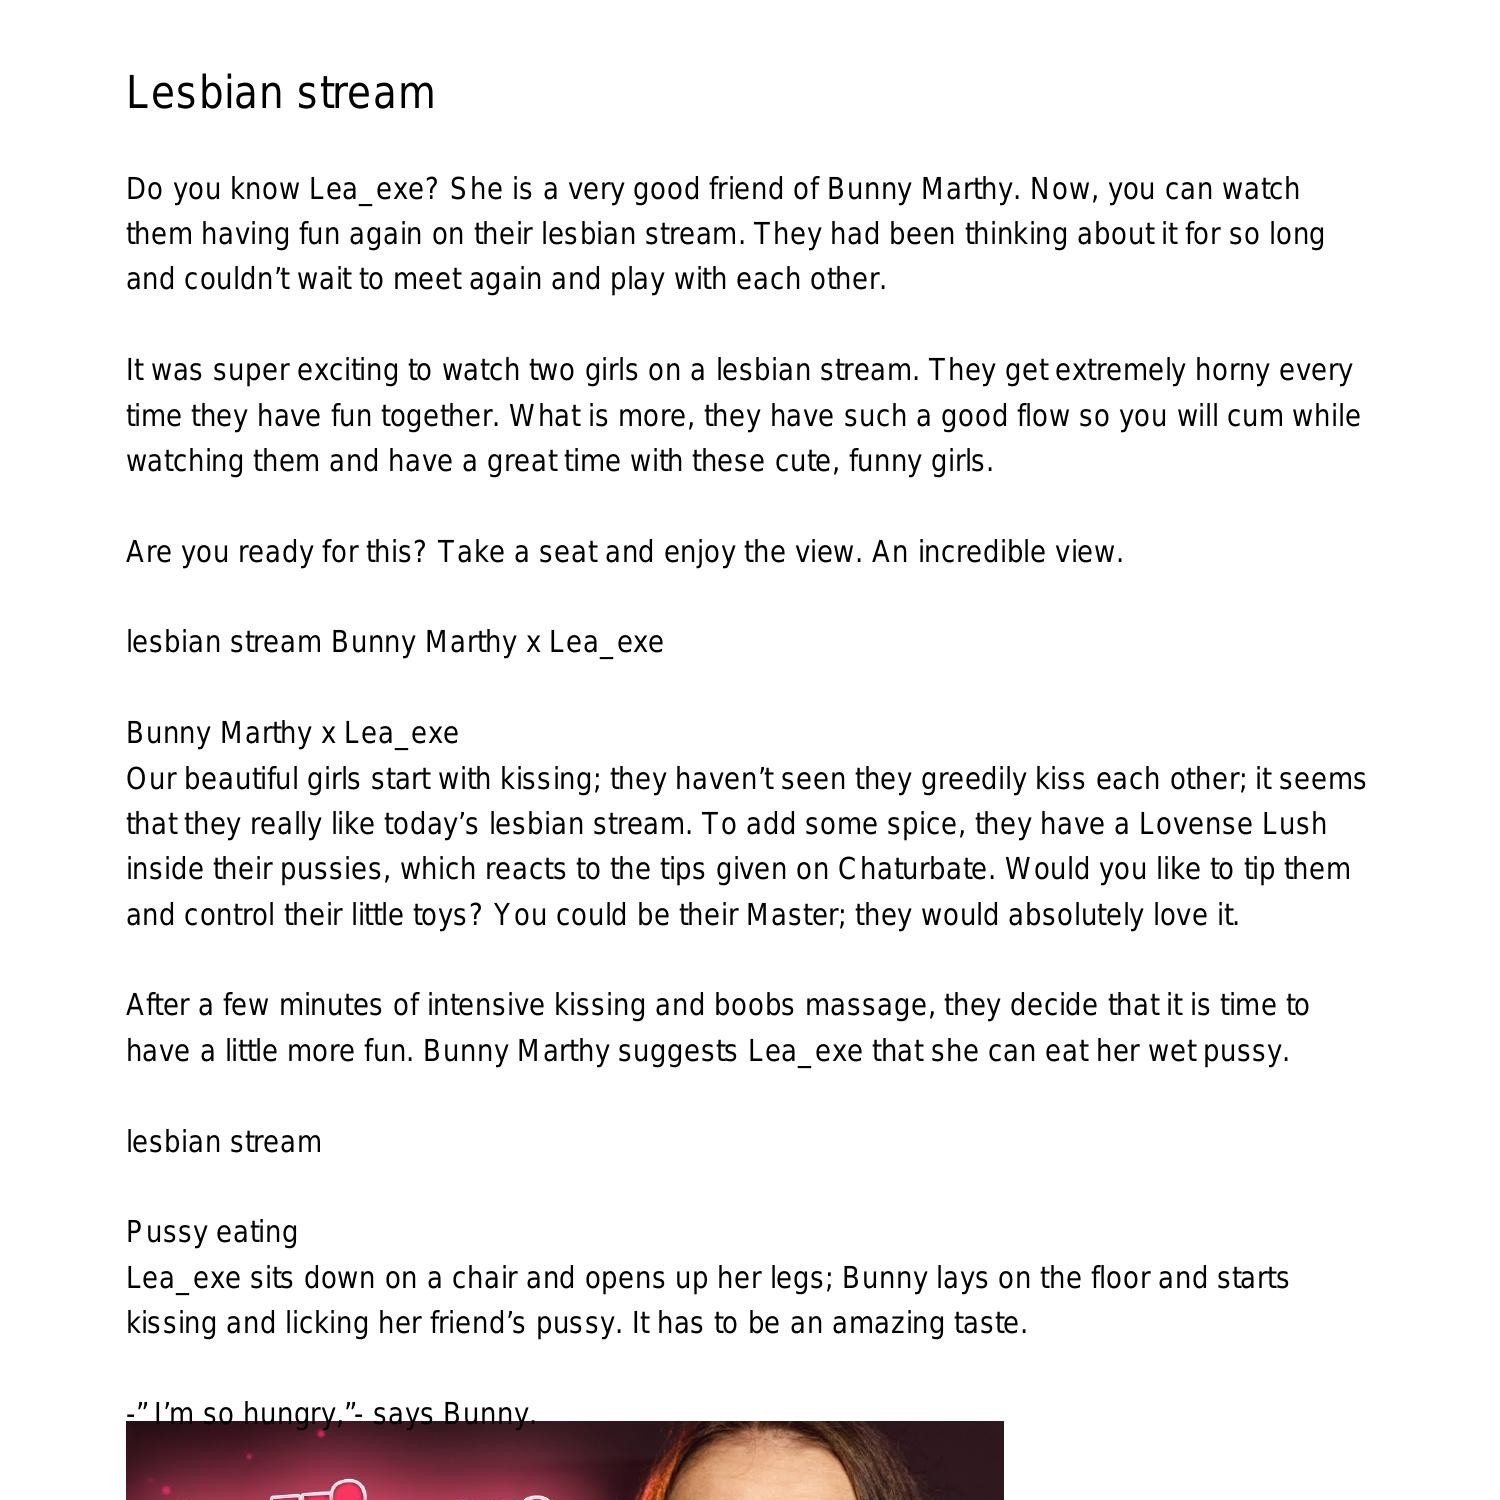 Lesbian massage net